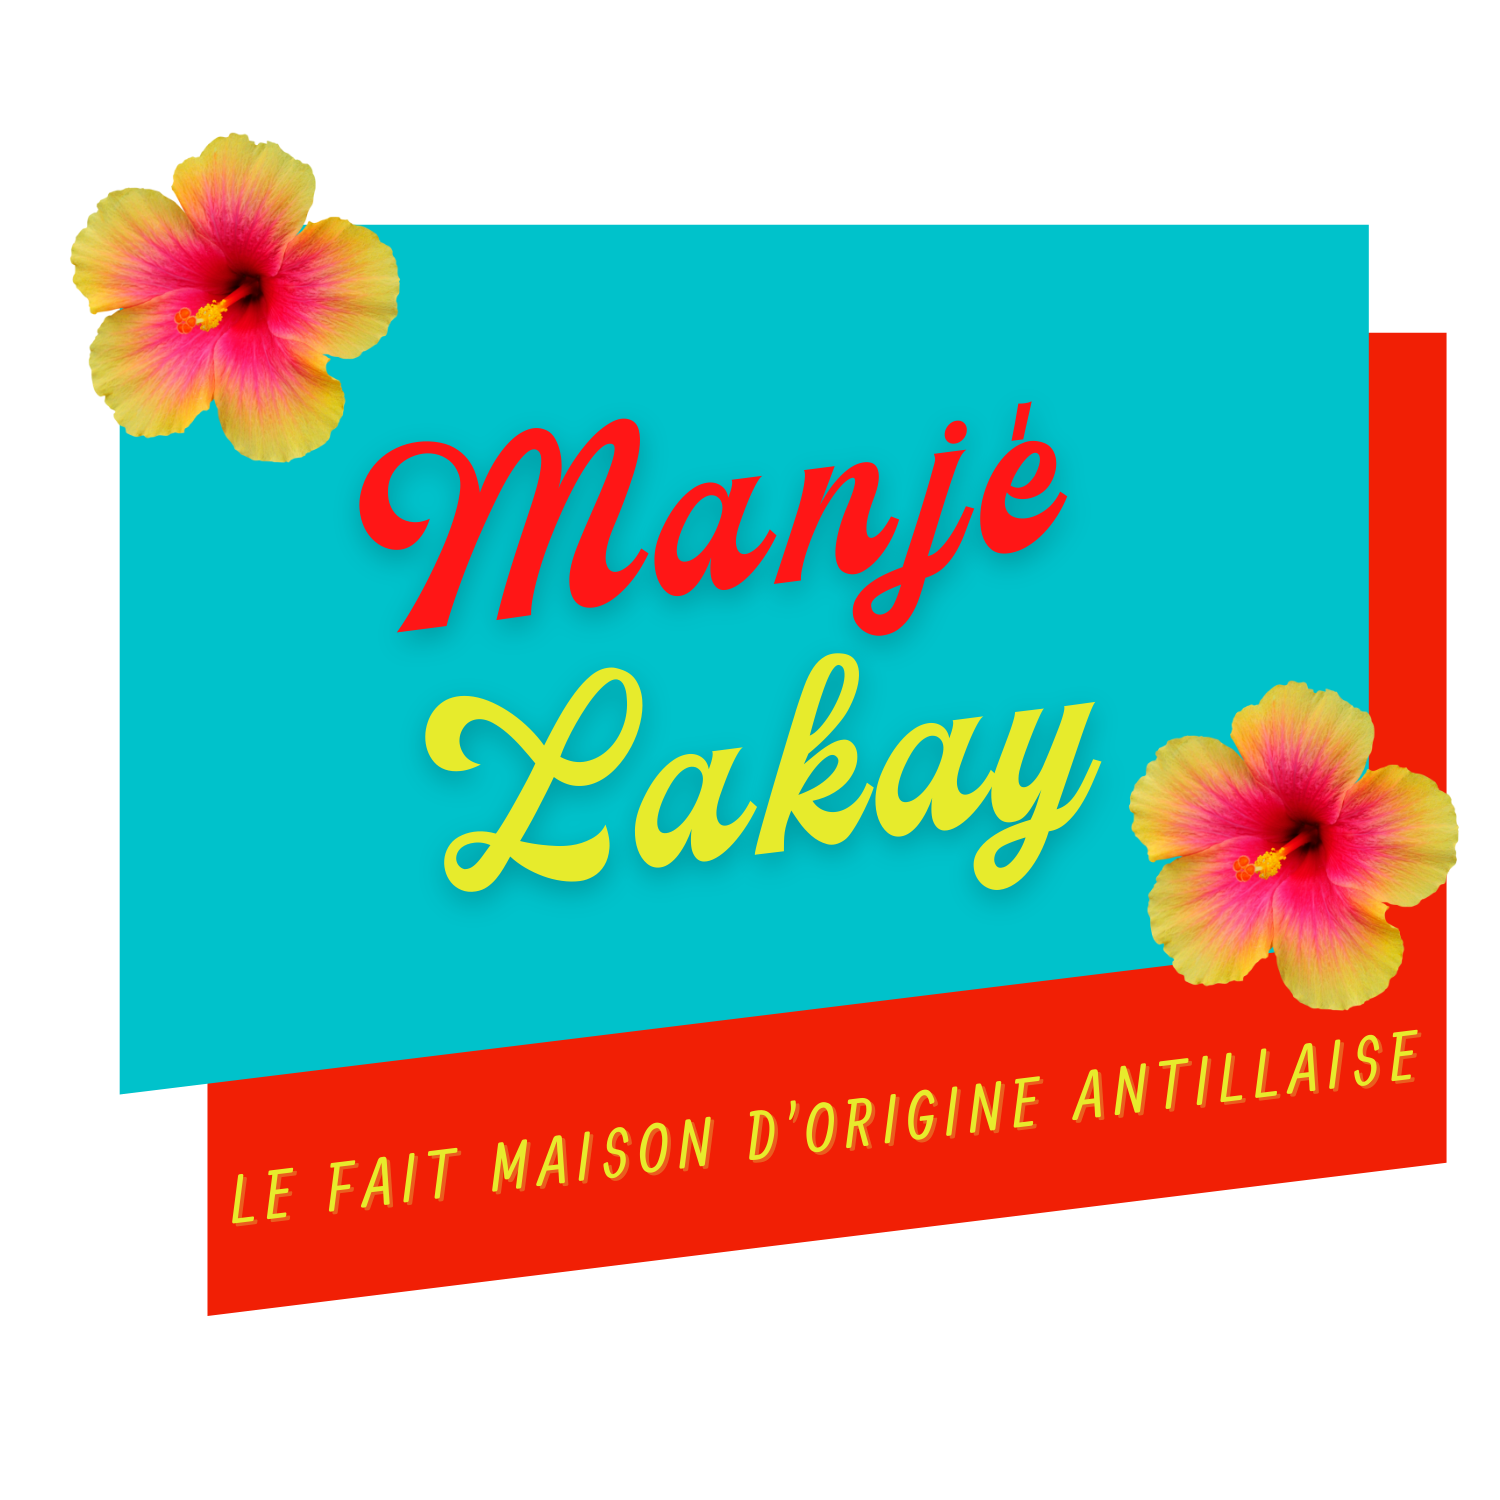 Manjé Lakay